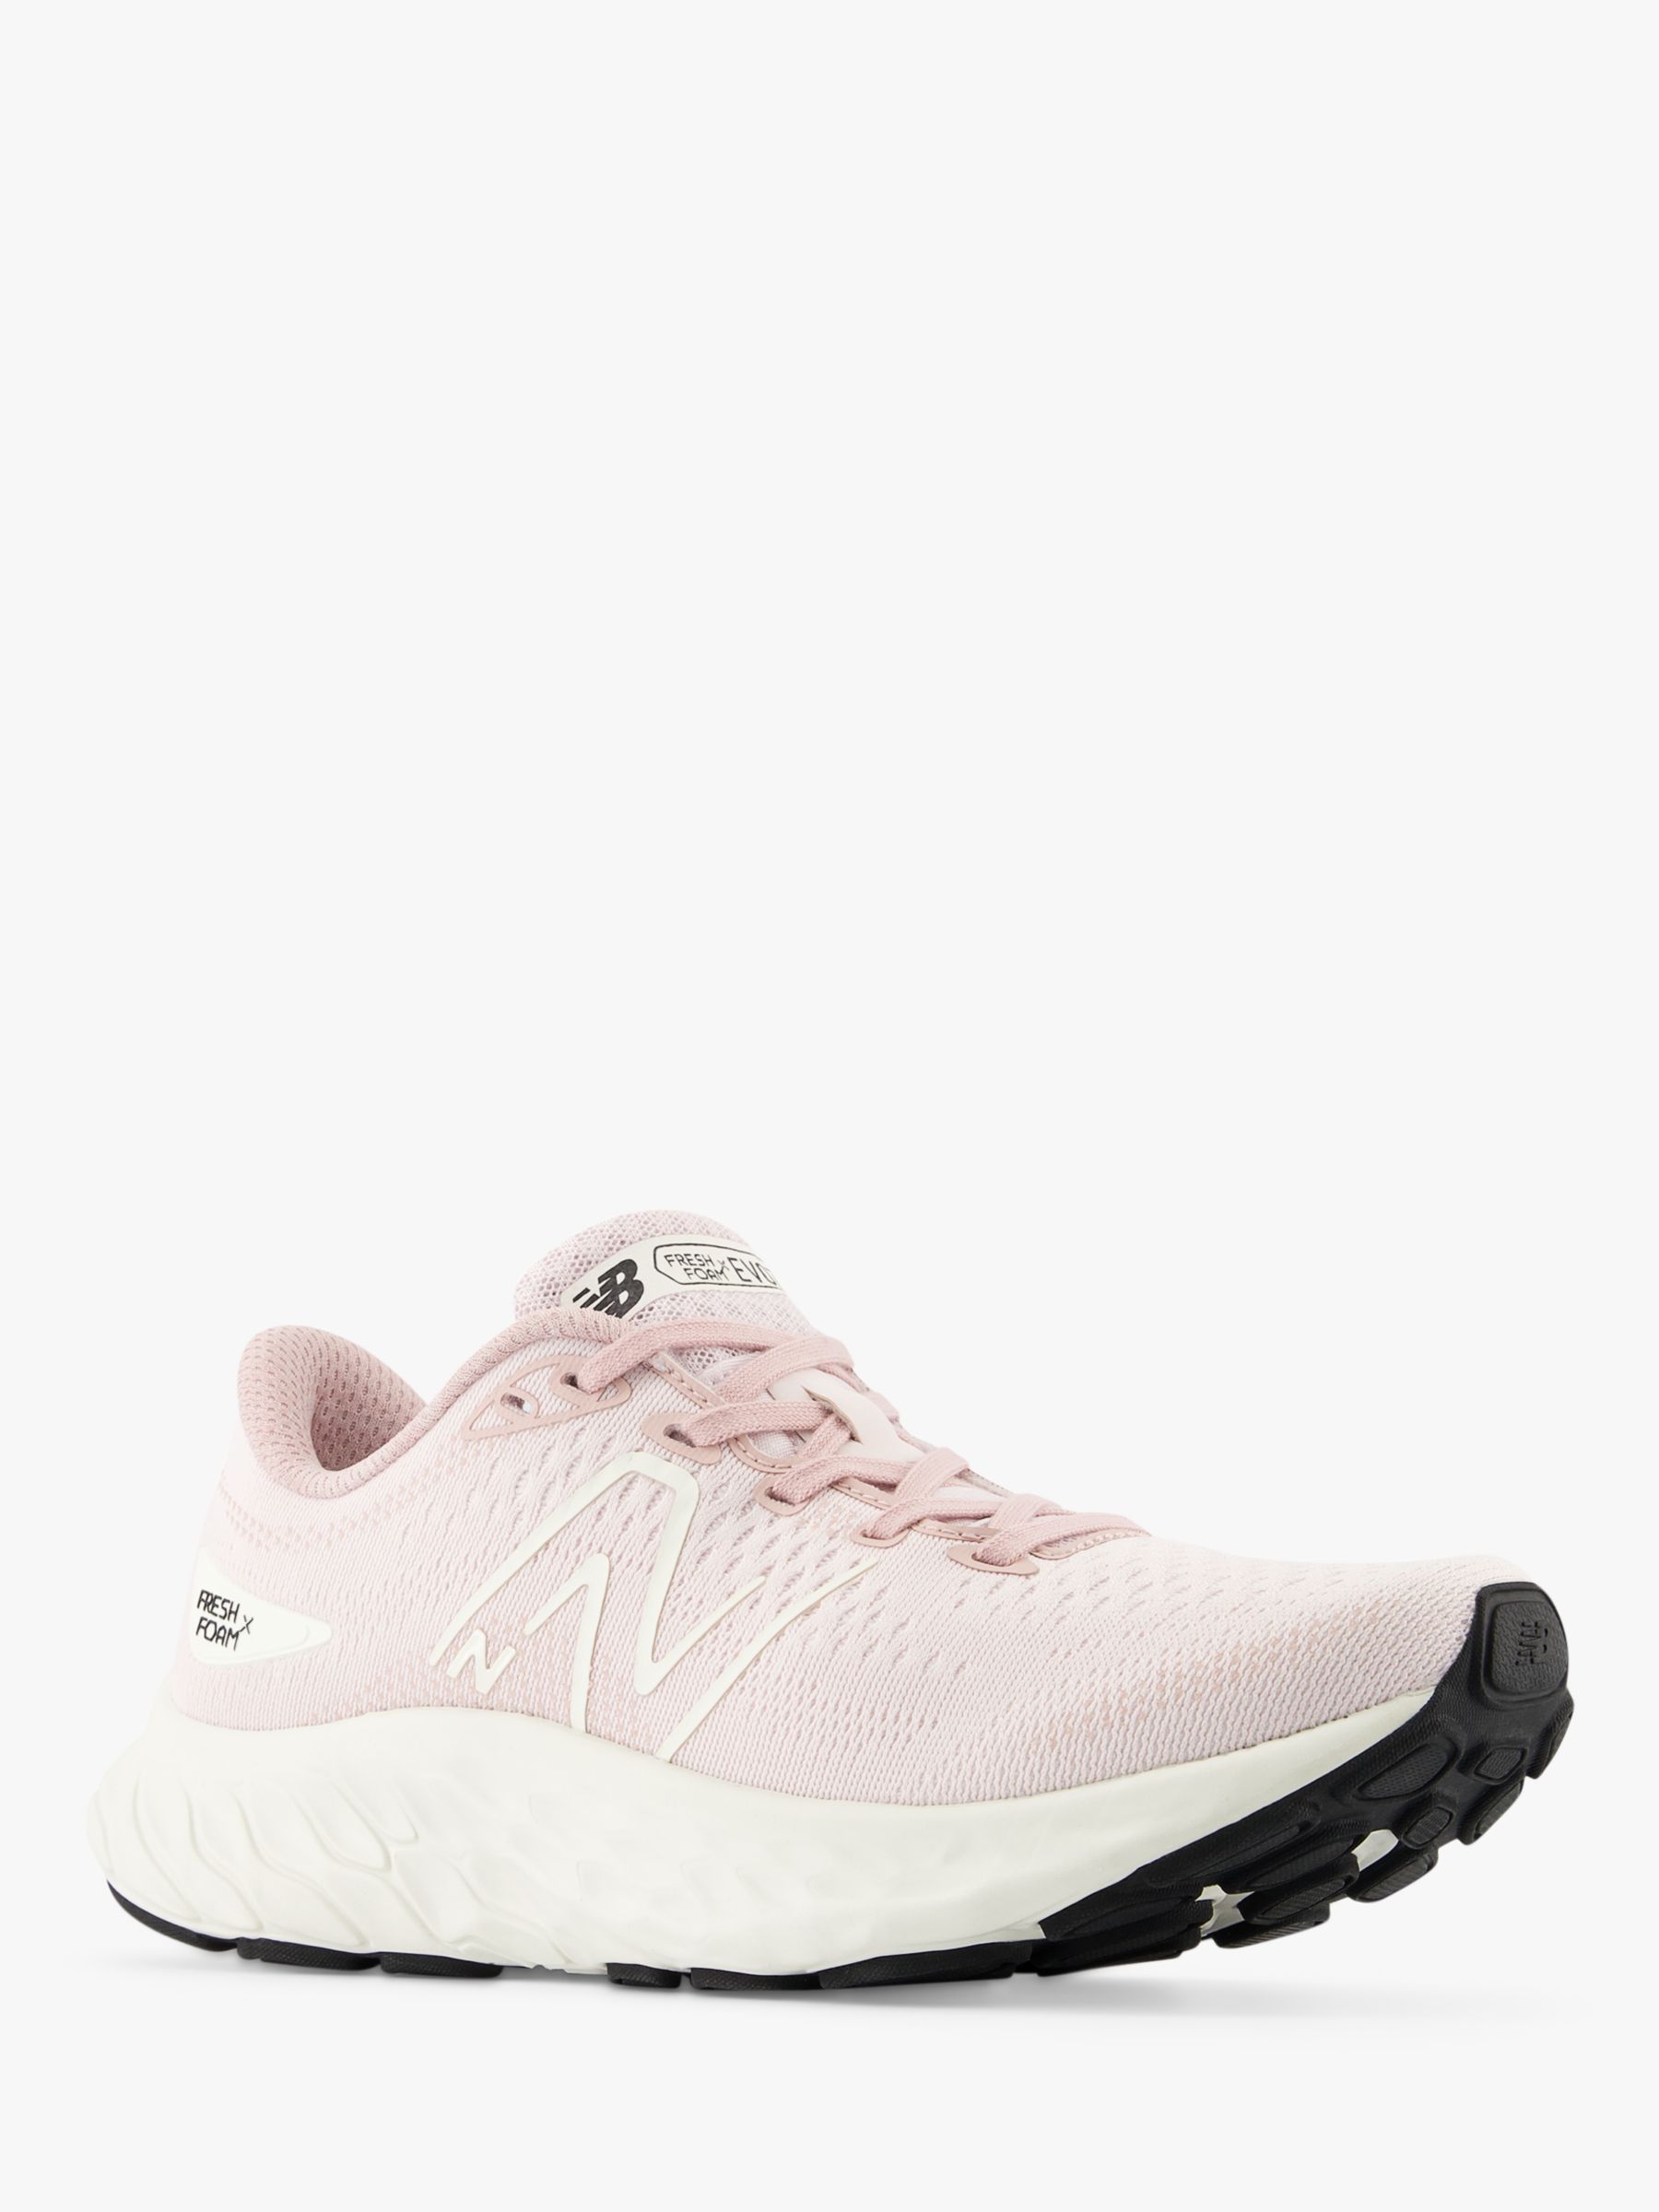 New Balance Fresh Foam X Evoz ST Women's Running Shoes, Pink Granite 667, 6.5